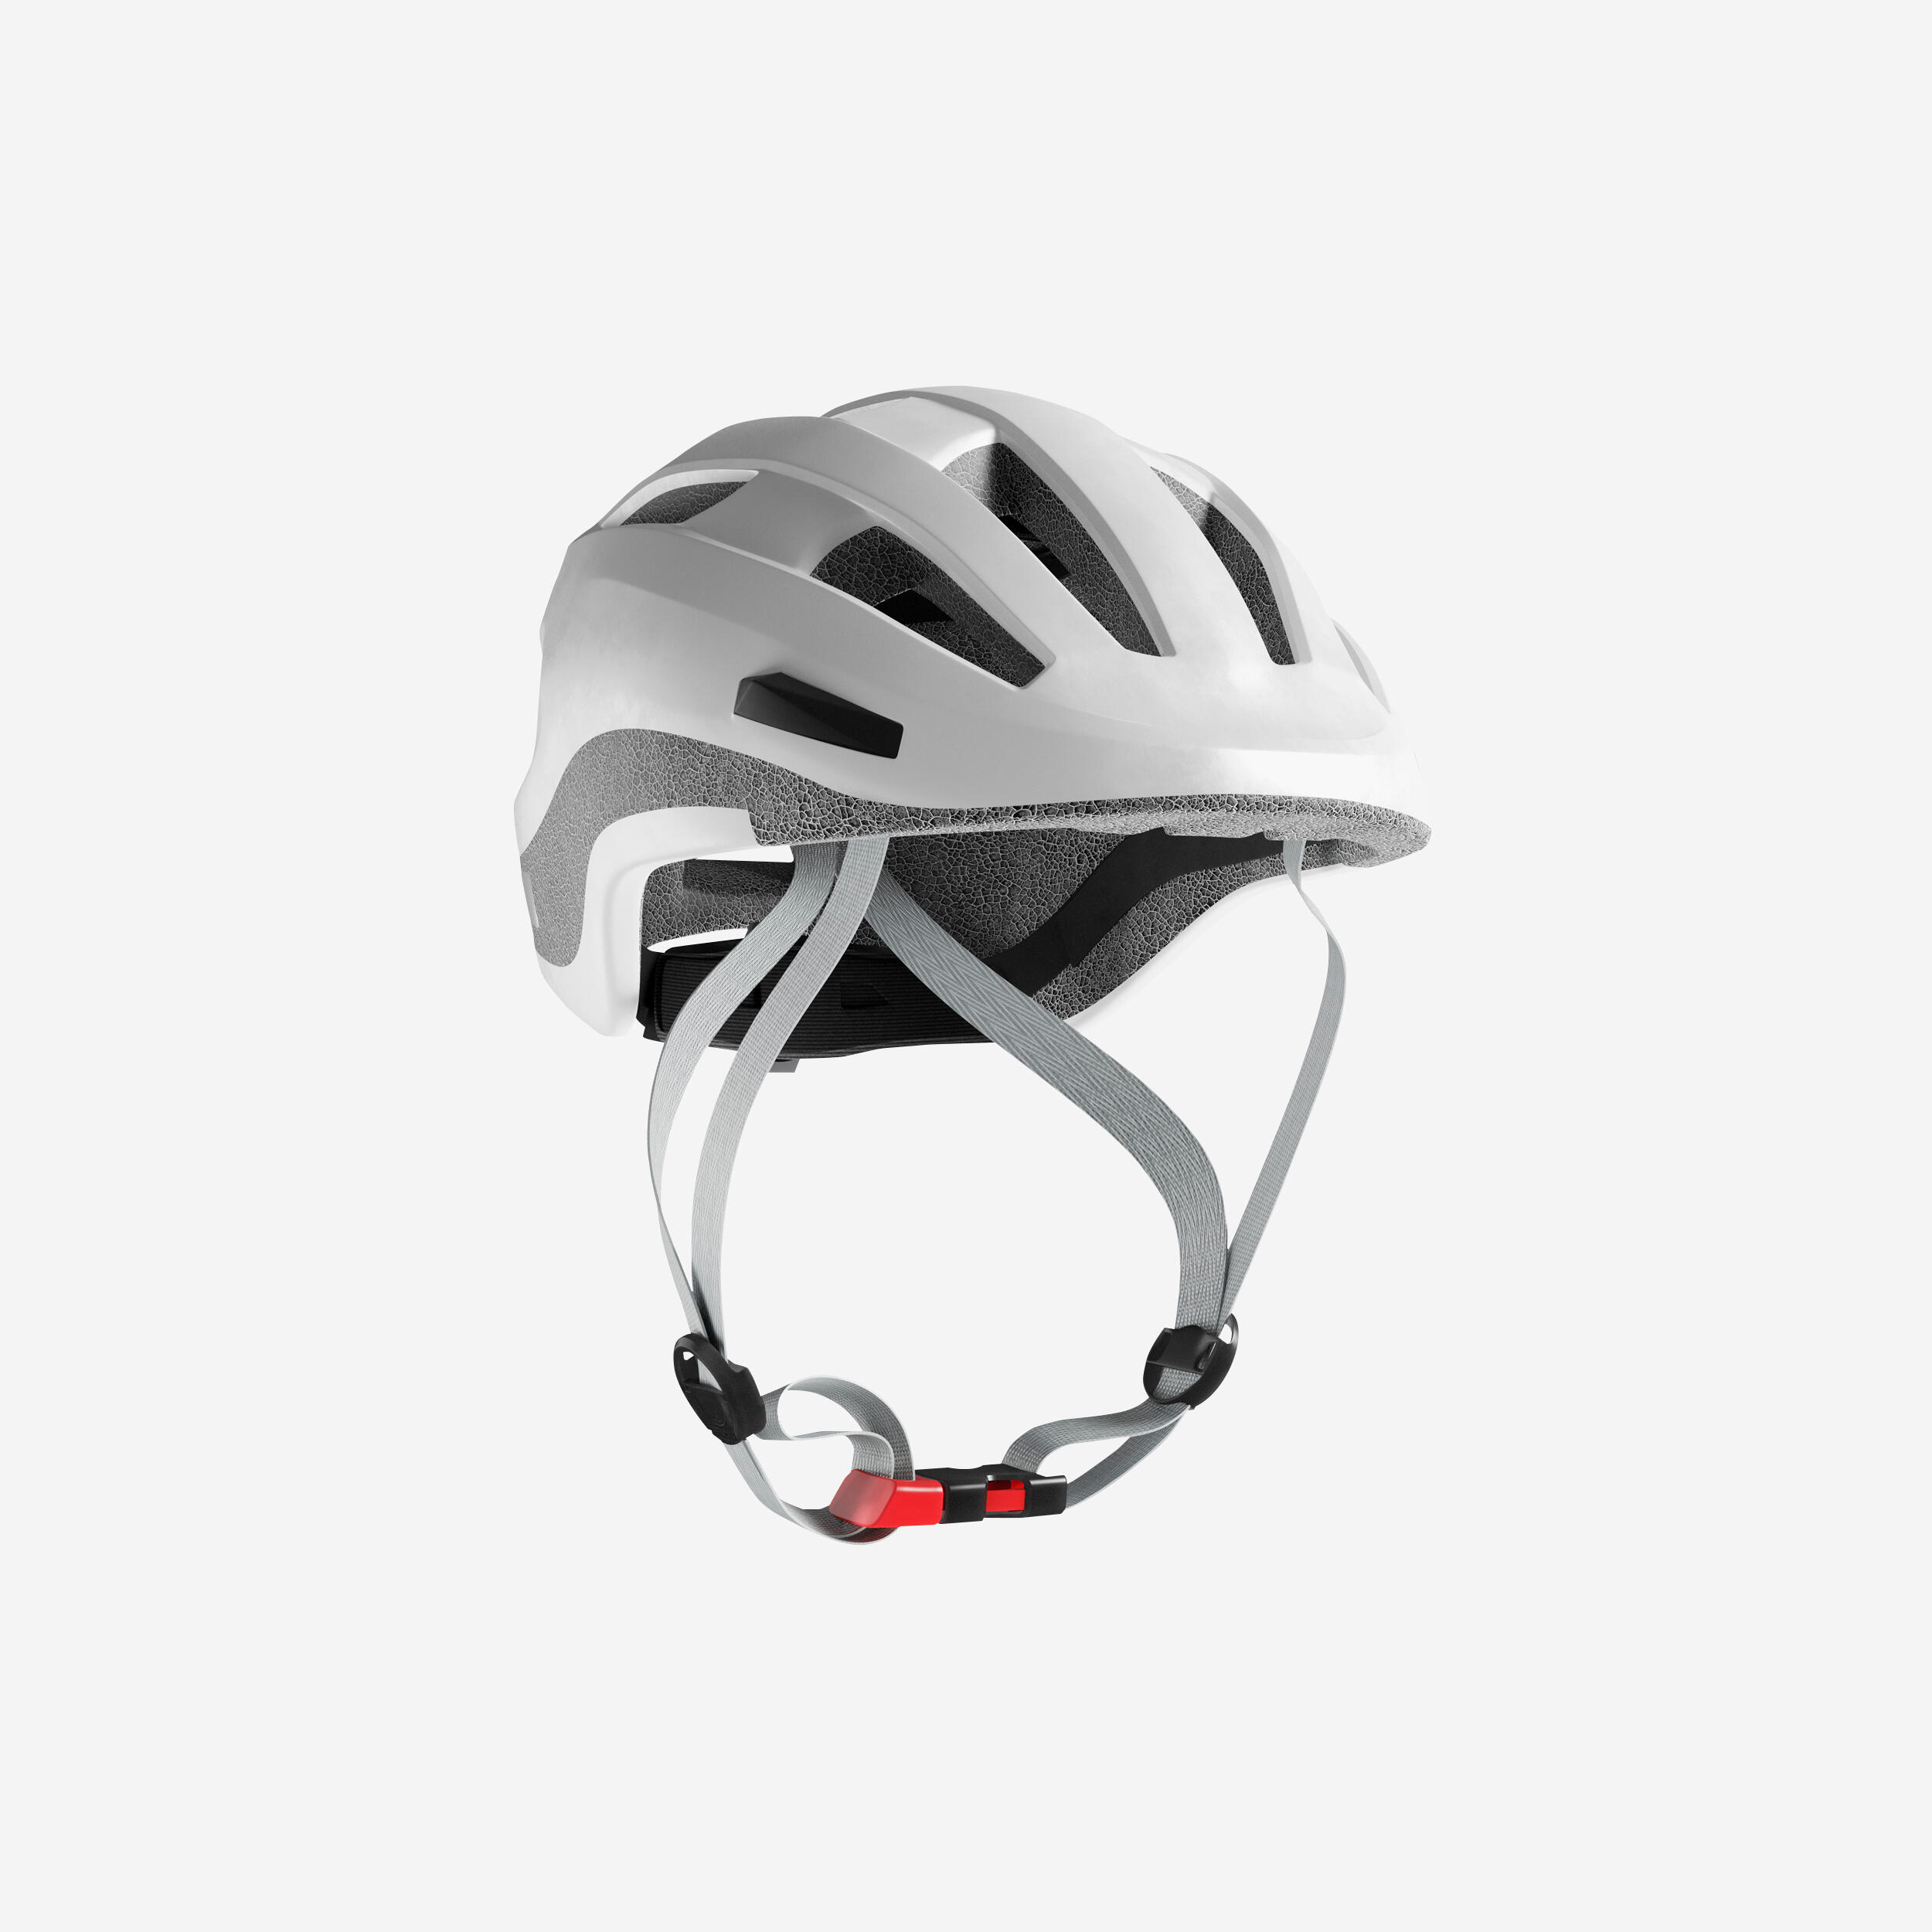 BTWIN City Cycling Helmet 500